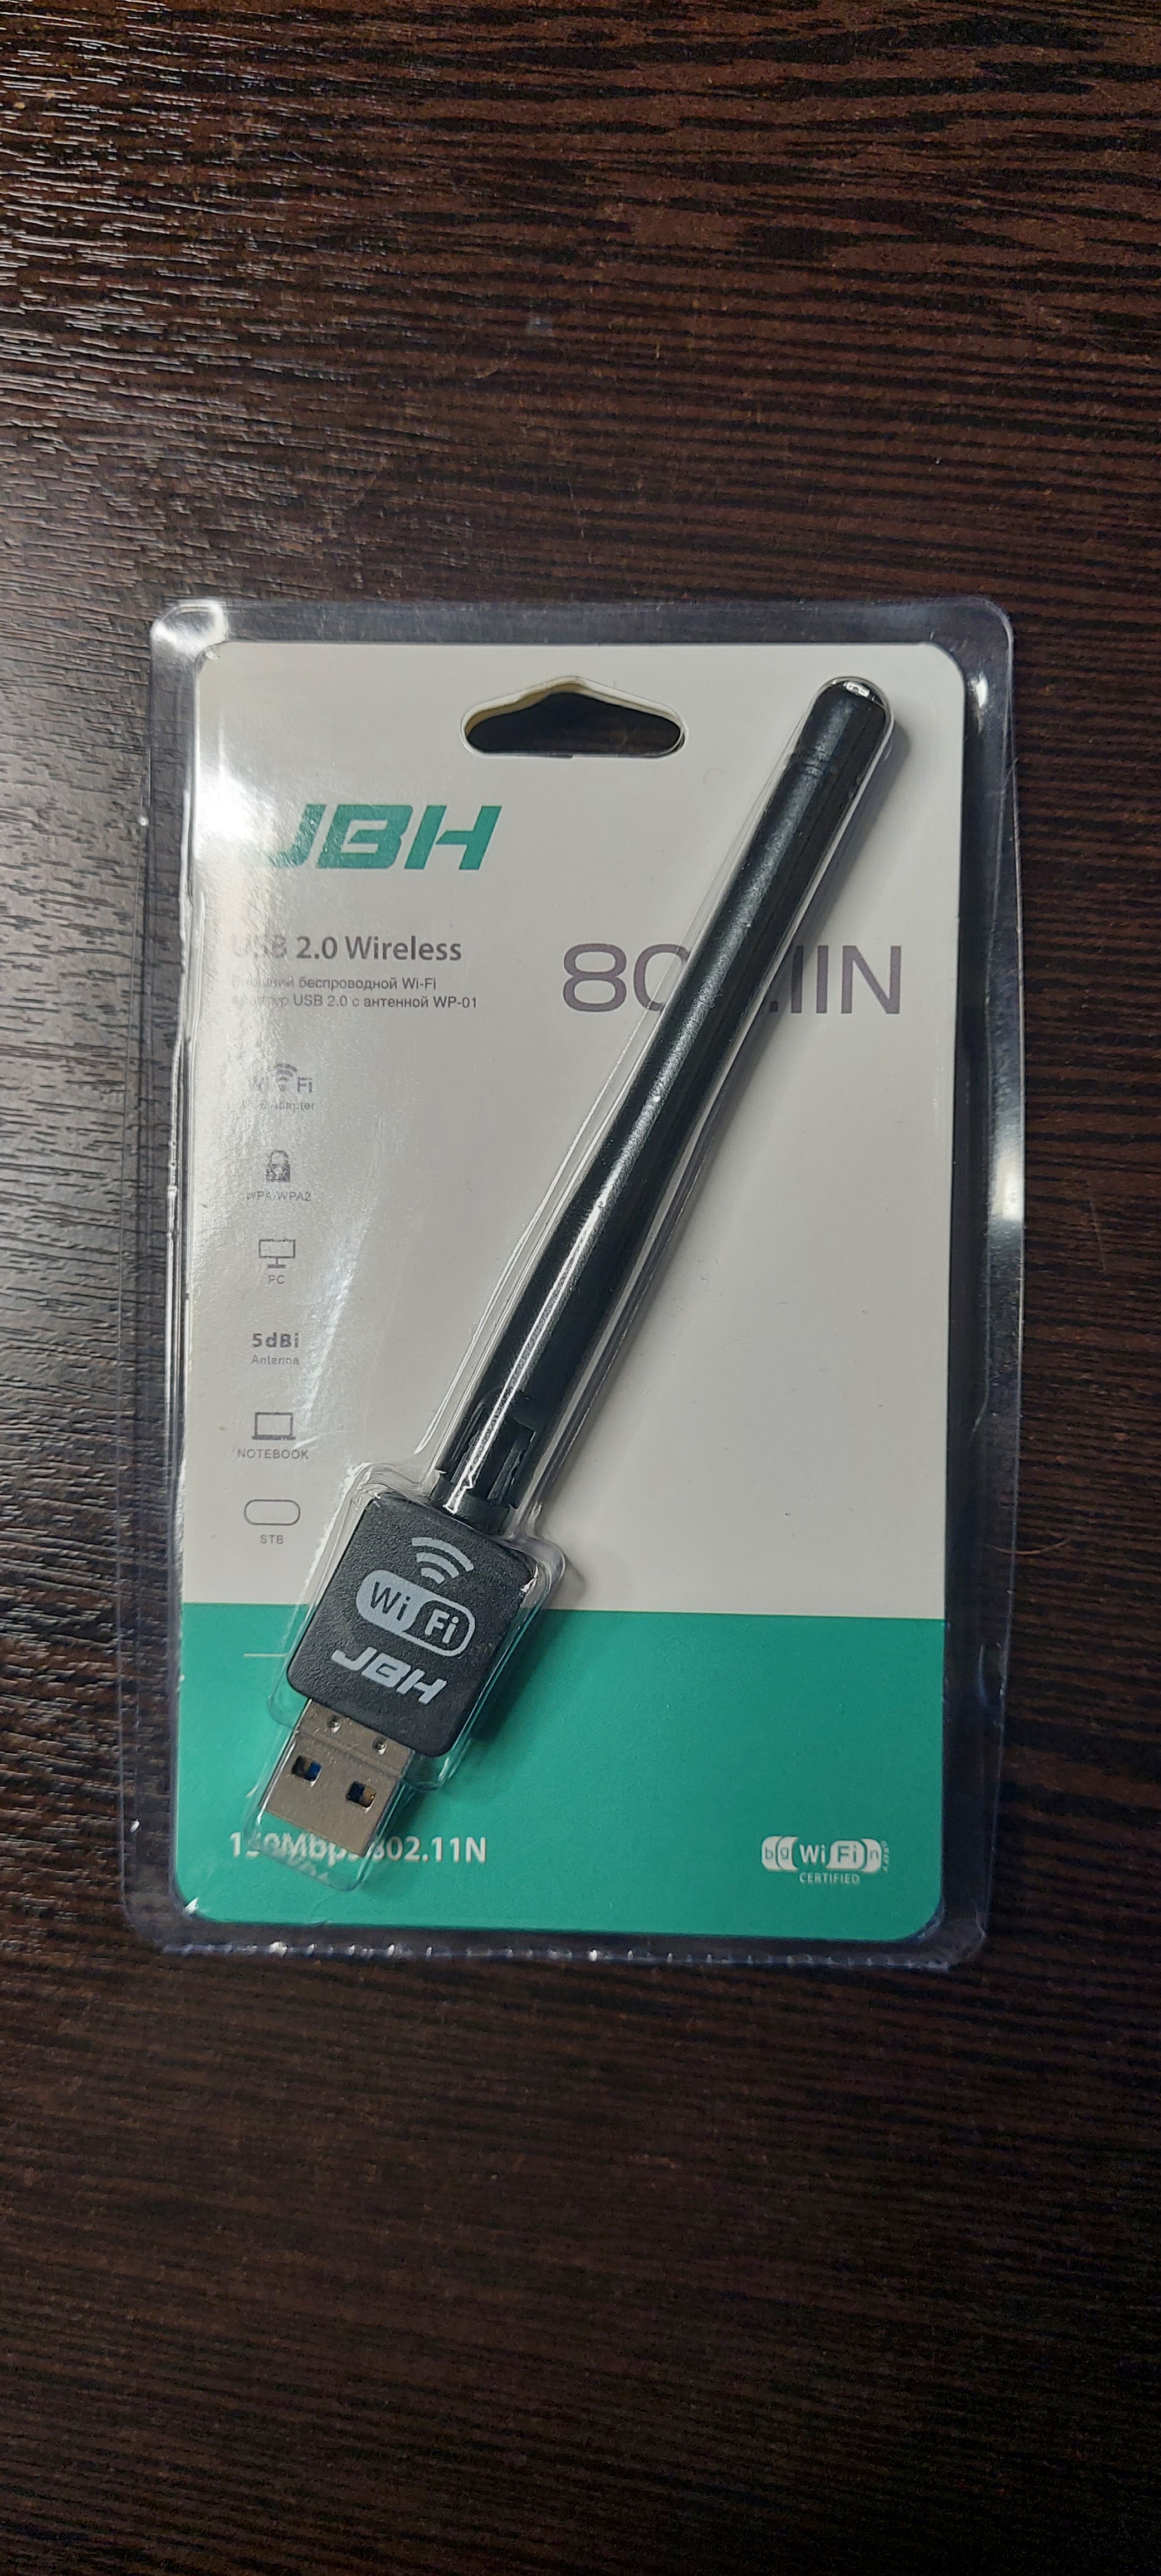 USB WI-FI адаптер 802.11n JBH 7300